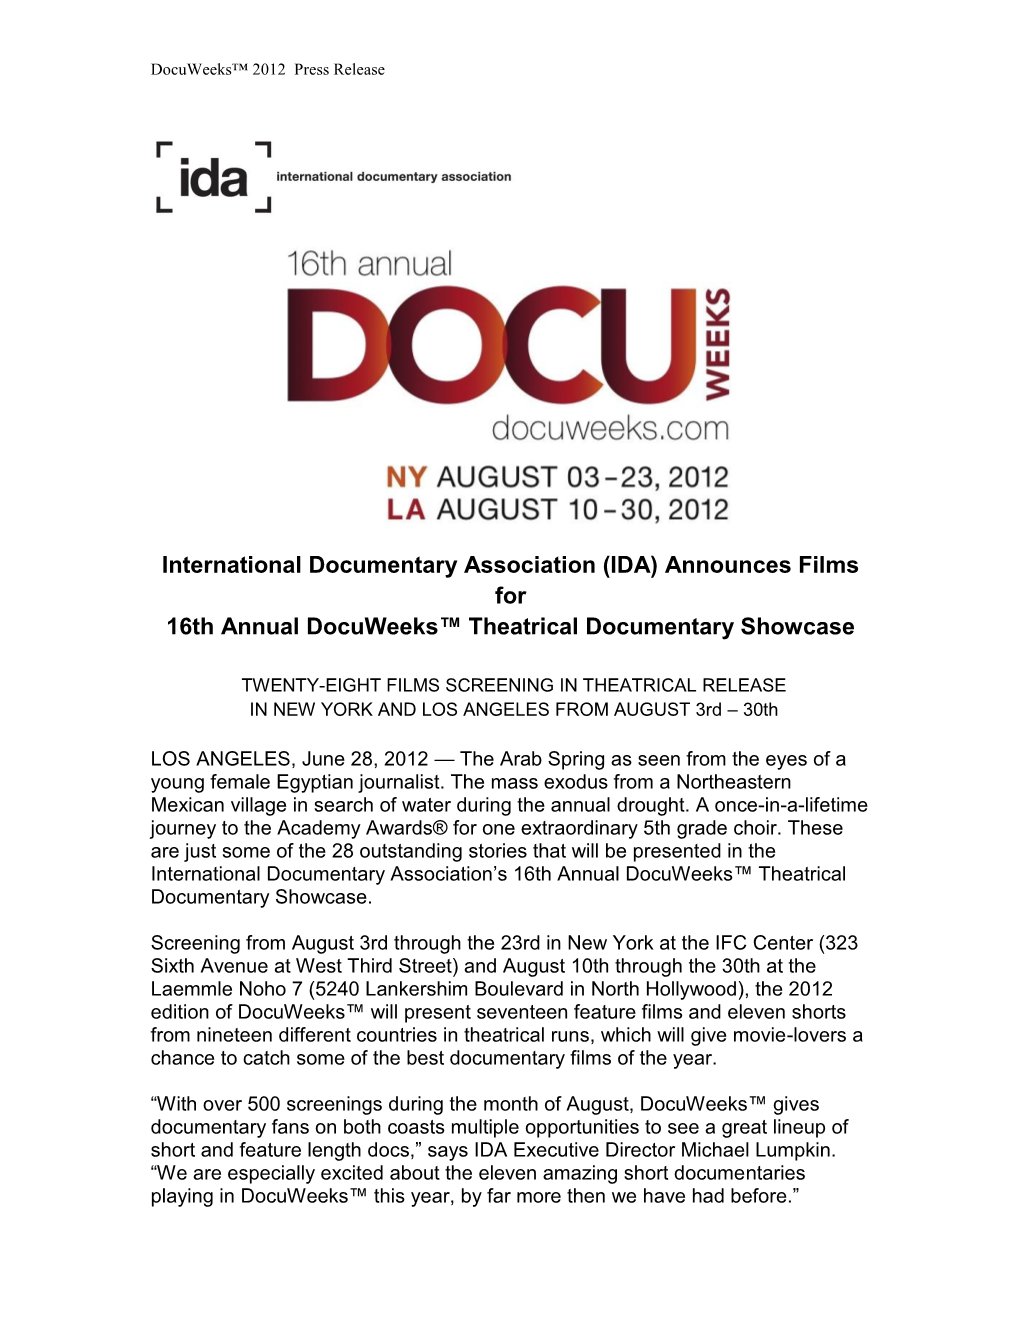 International Documentary Association (IDA) Announces Films for 16Th Annual Docuweeks™ Theatrical Documentary Showcase